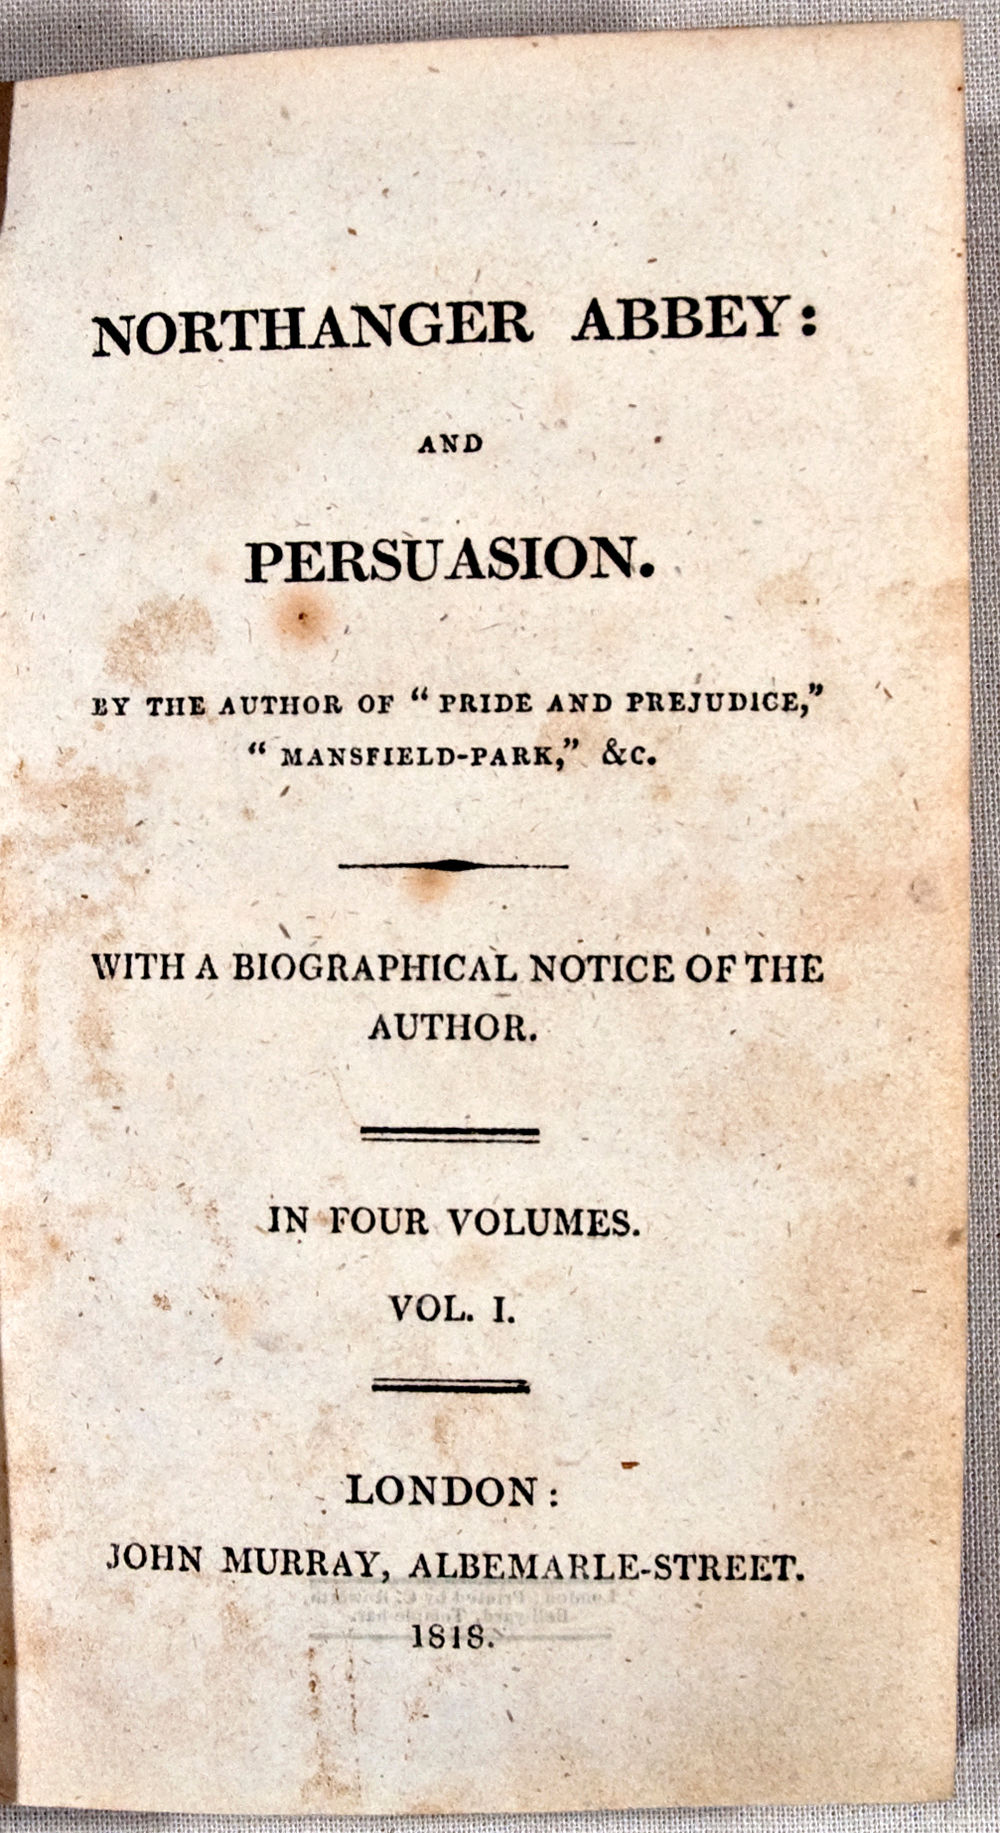 Jane Austen: Persuasion (1818, John Murray)